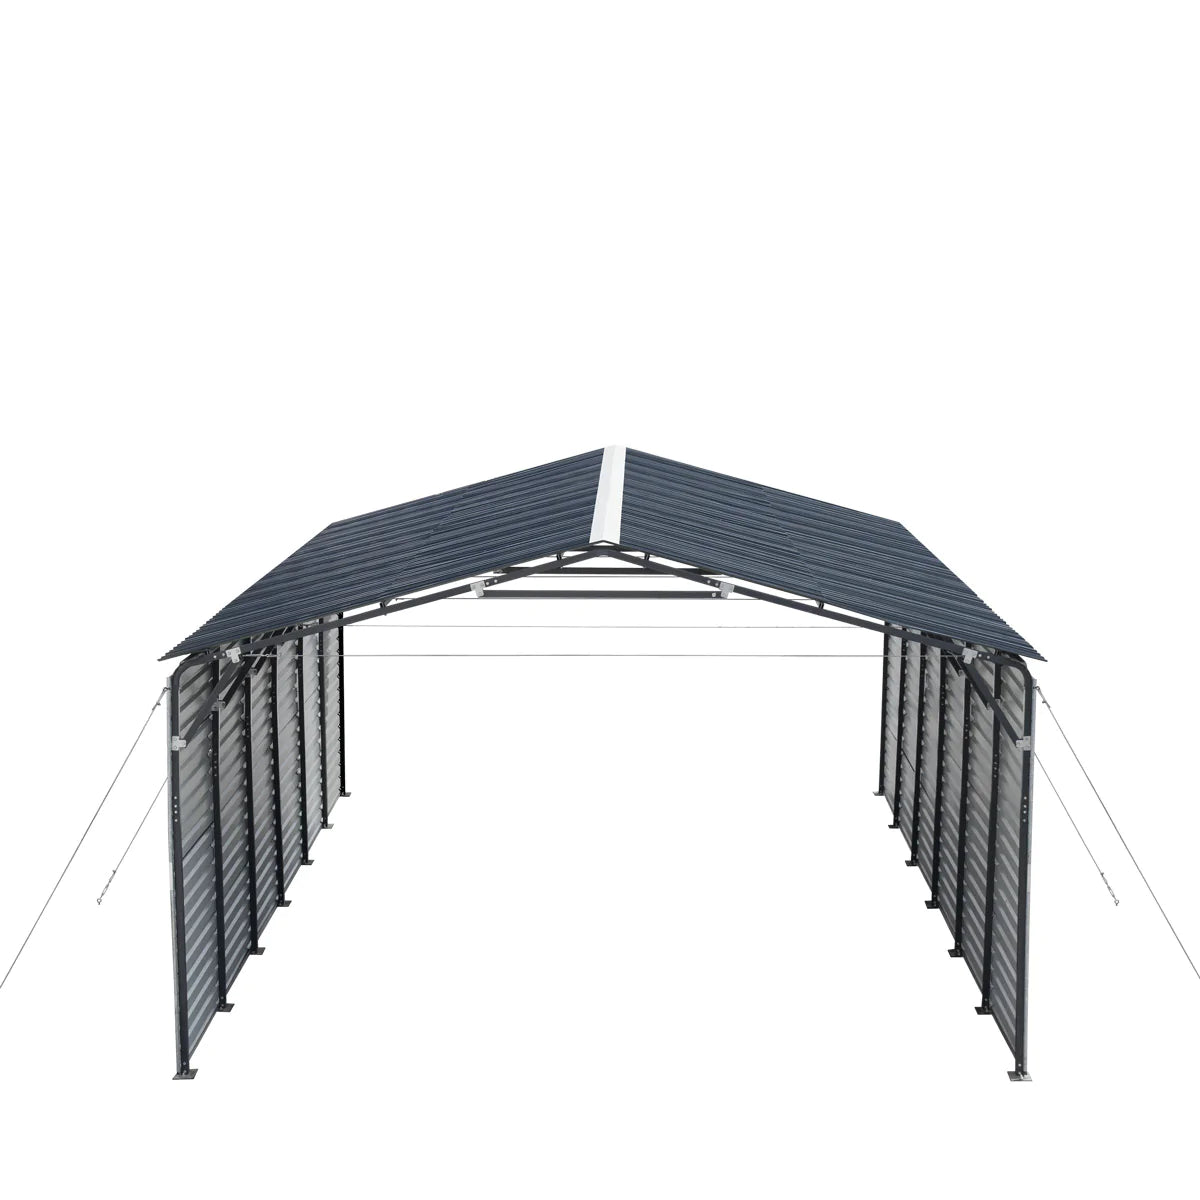 New 20’ x 30’ Metal Shed Carport, 10’ Enclosed Sidewalls, 600 Sq-Ft, 27 GA Corrugated Panels